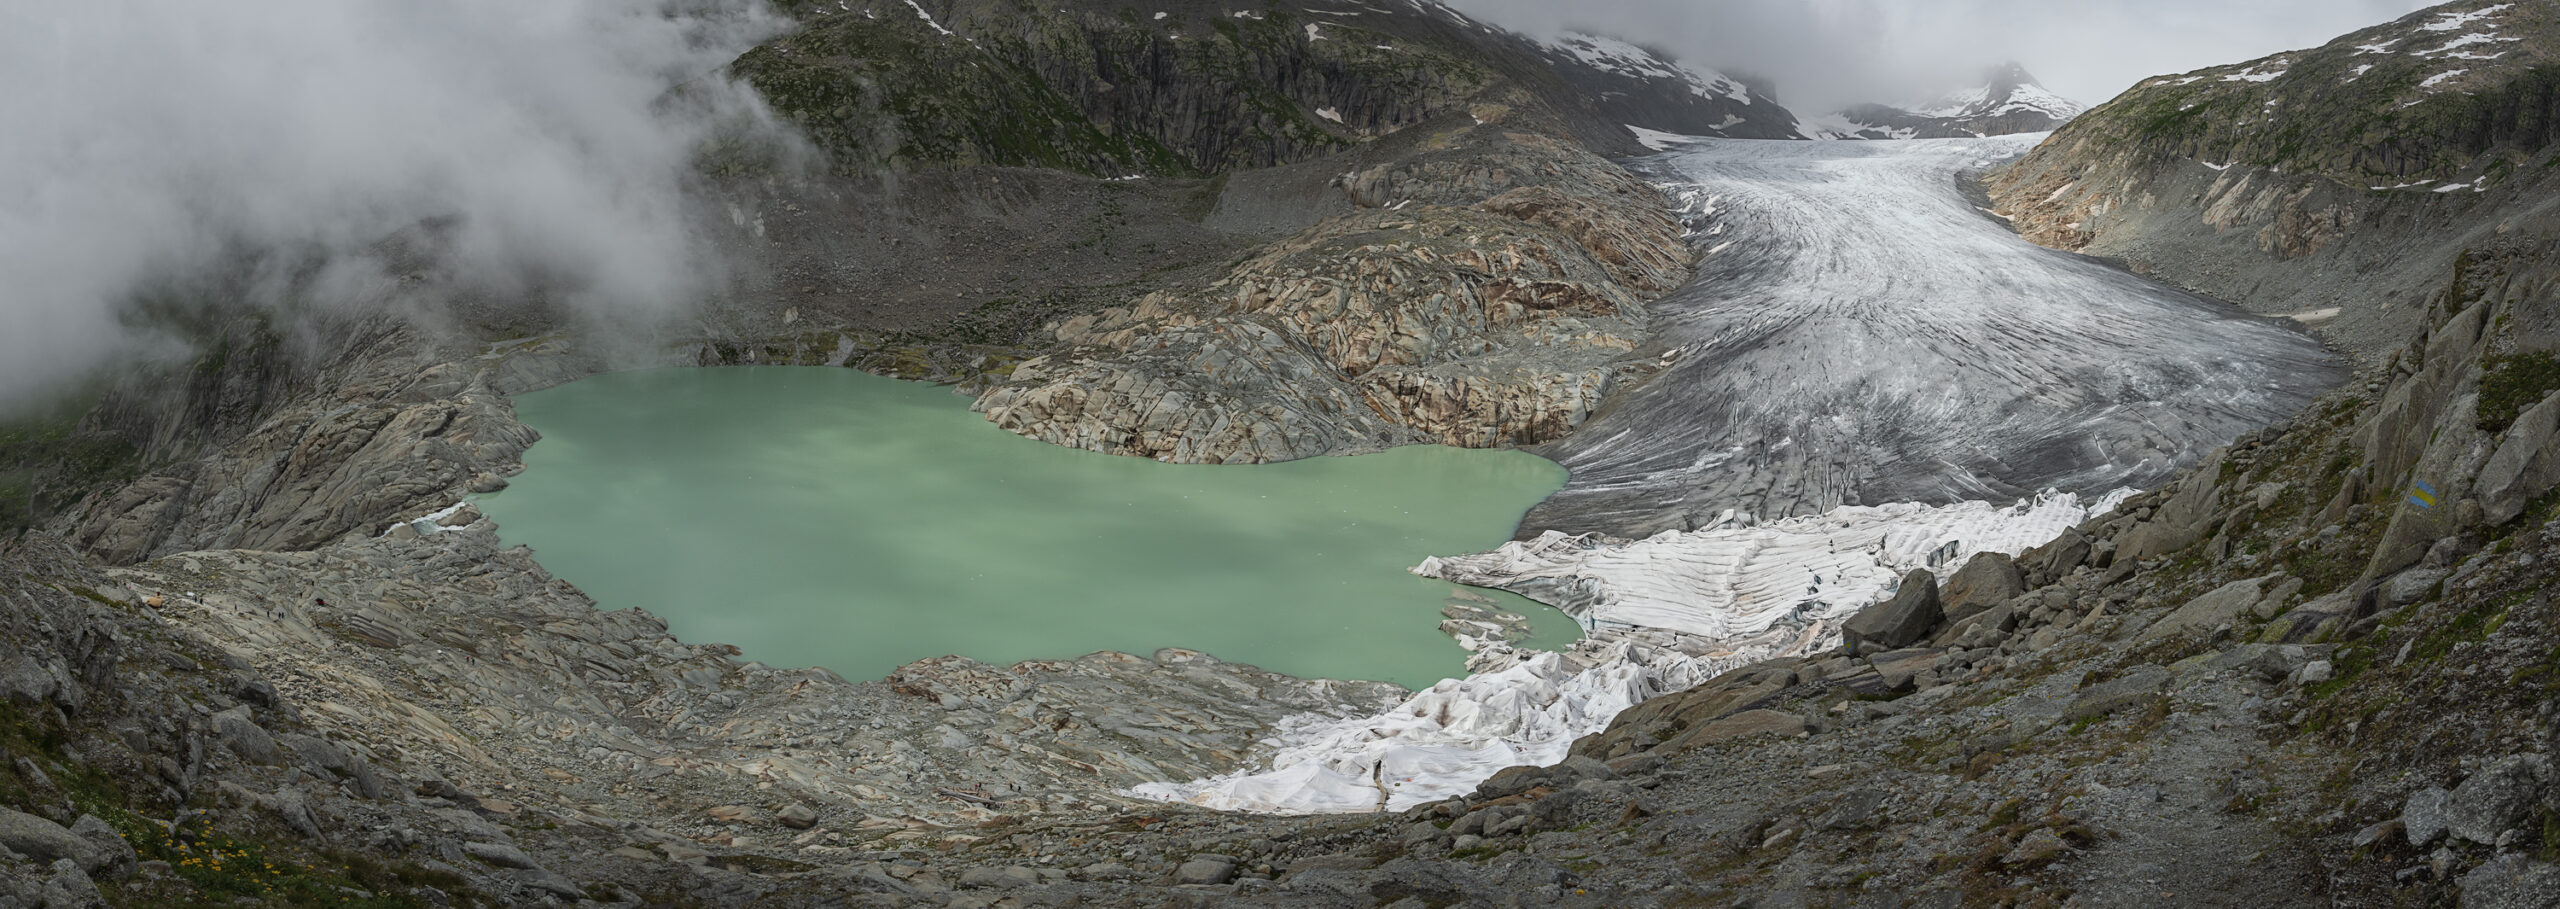 the Rhone glacier in Switzerland